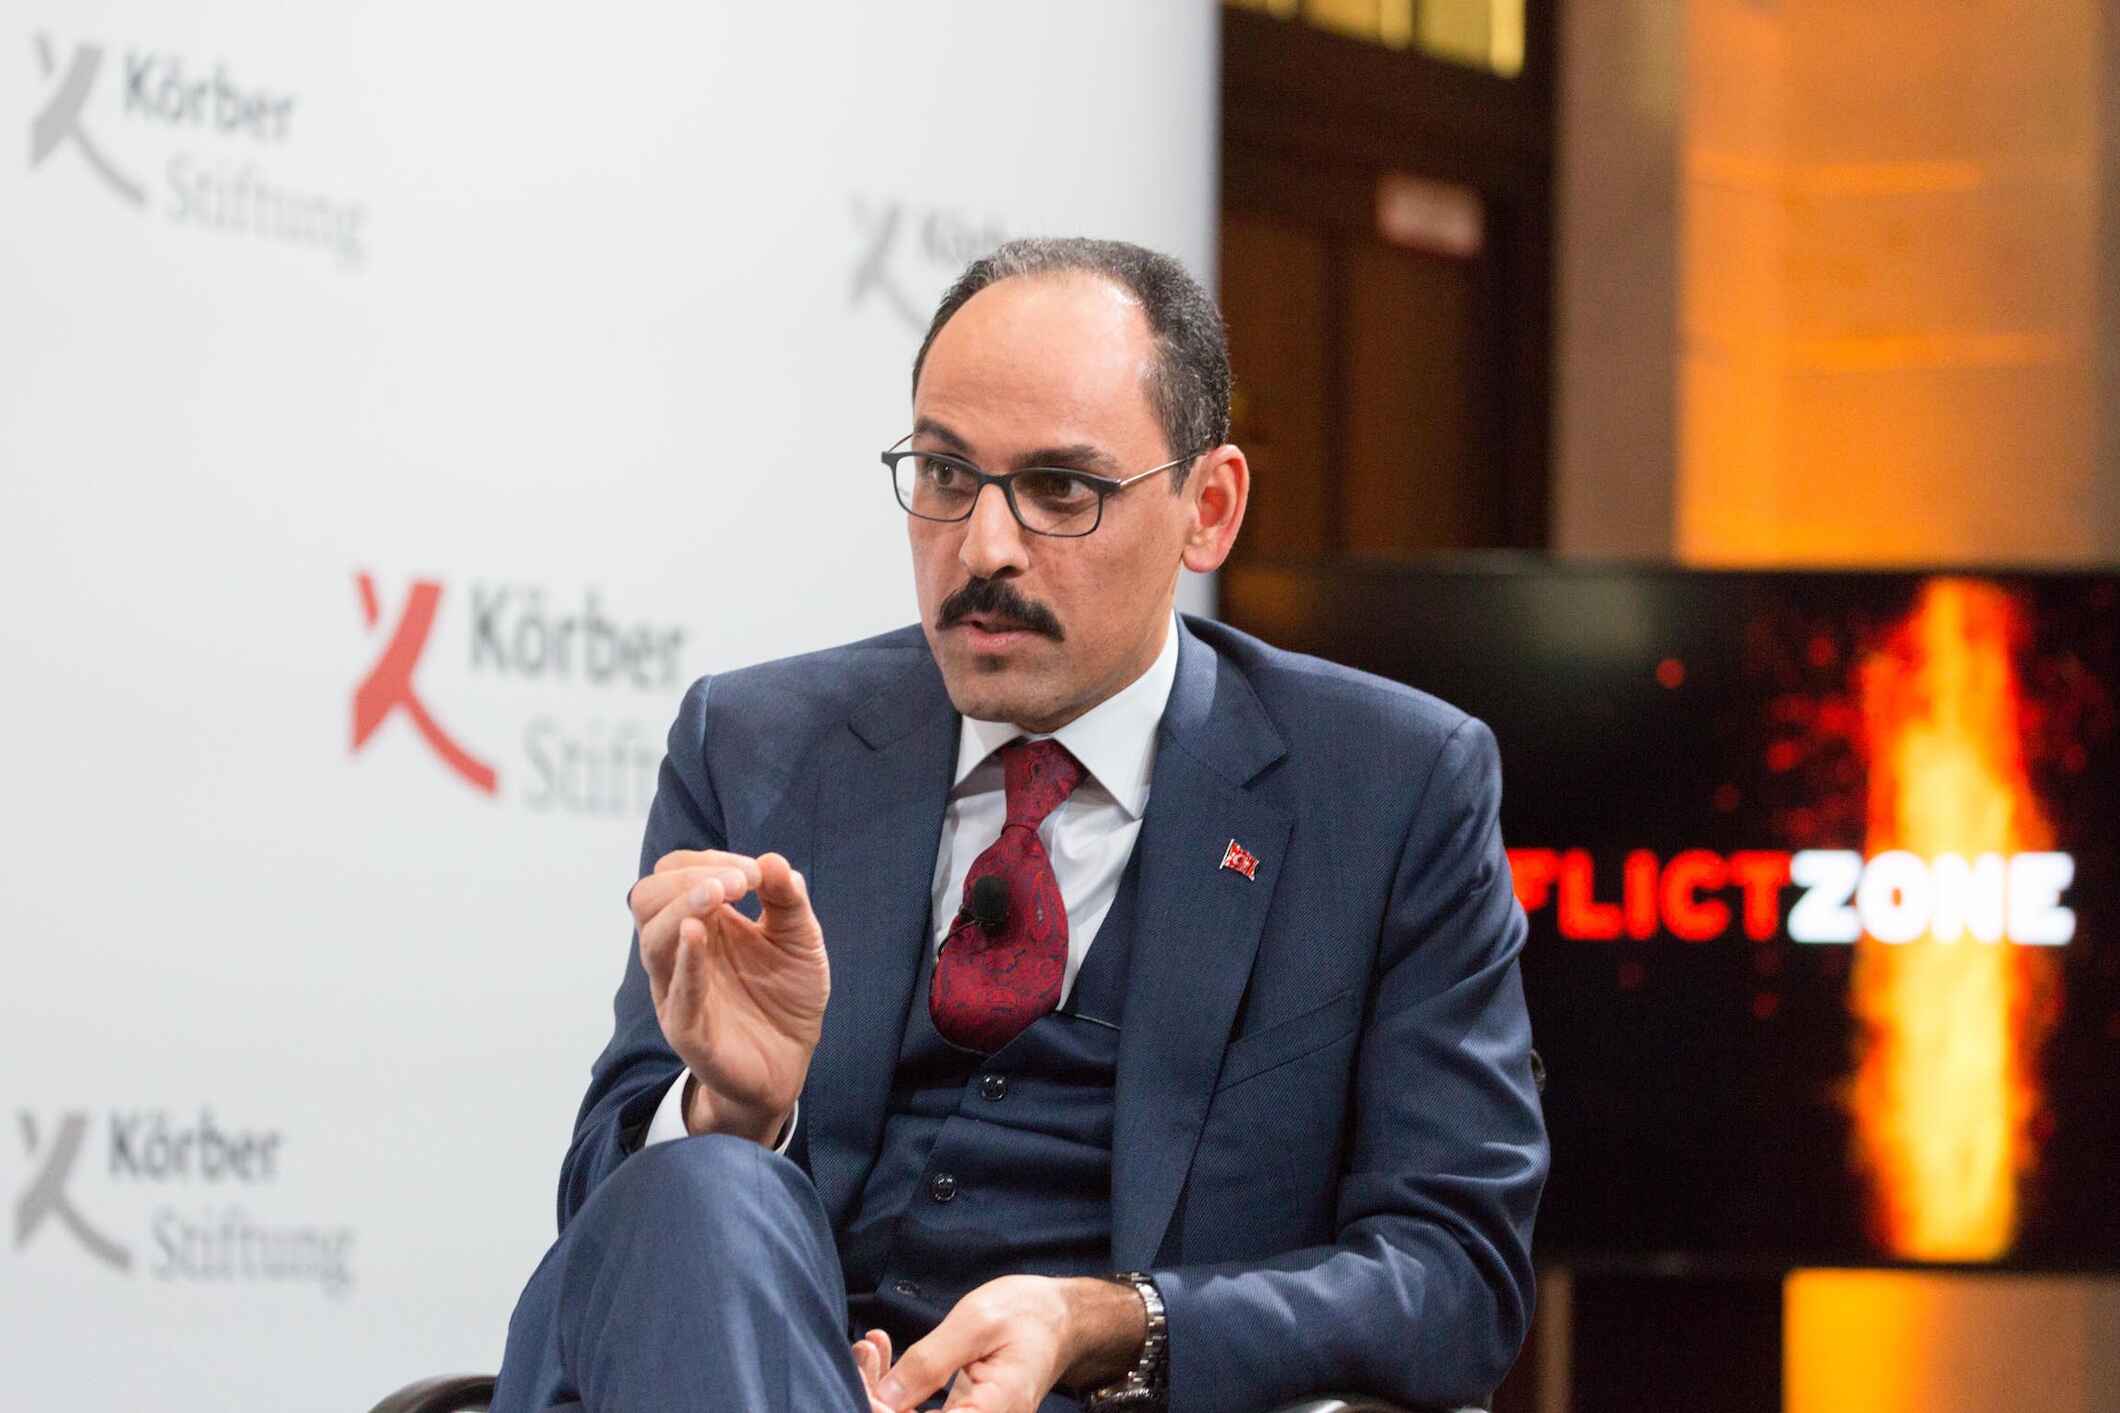 İbrahim Kalın, Presidential Spokesperson, Presidency of the Republic of Turkey